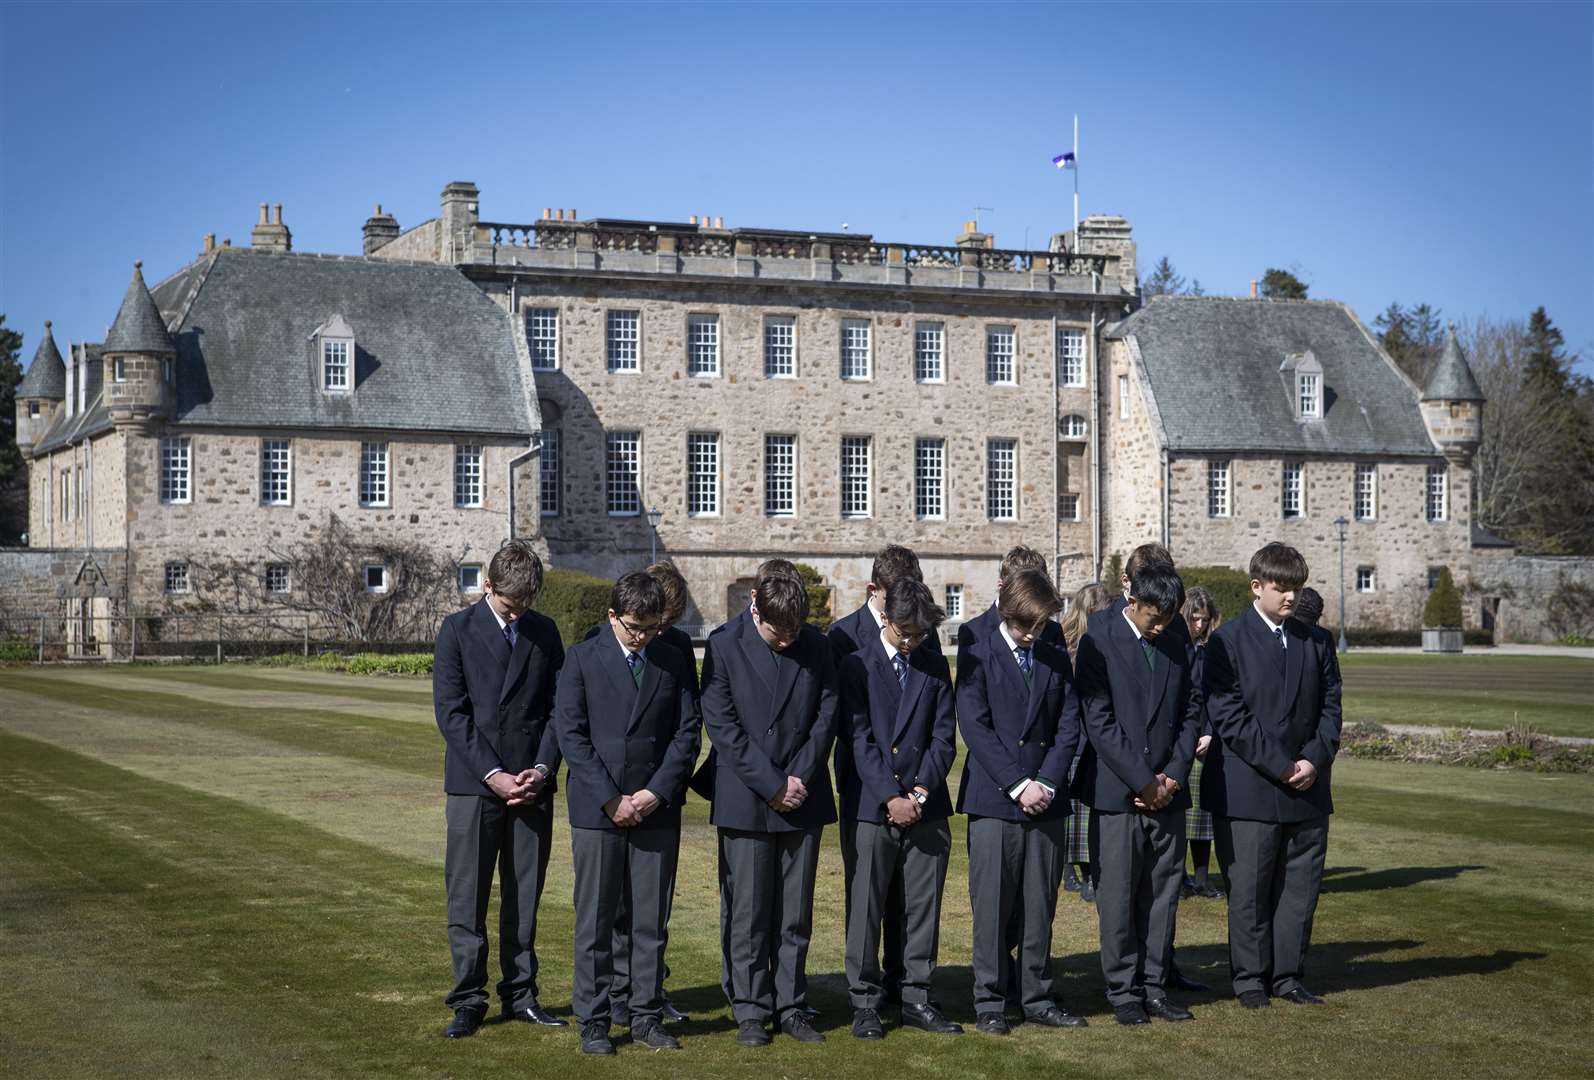 Pupils at the Duke of Edinburgh’s former school, Gordonstoun, bowed their heads as the funeral service began at Windsor Castle (Jane Barlow/PA)